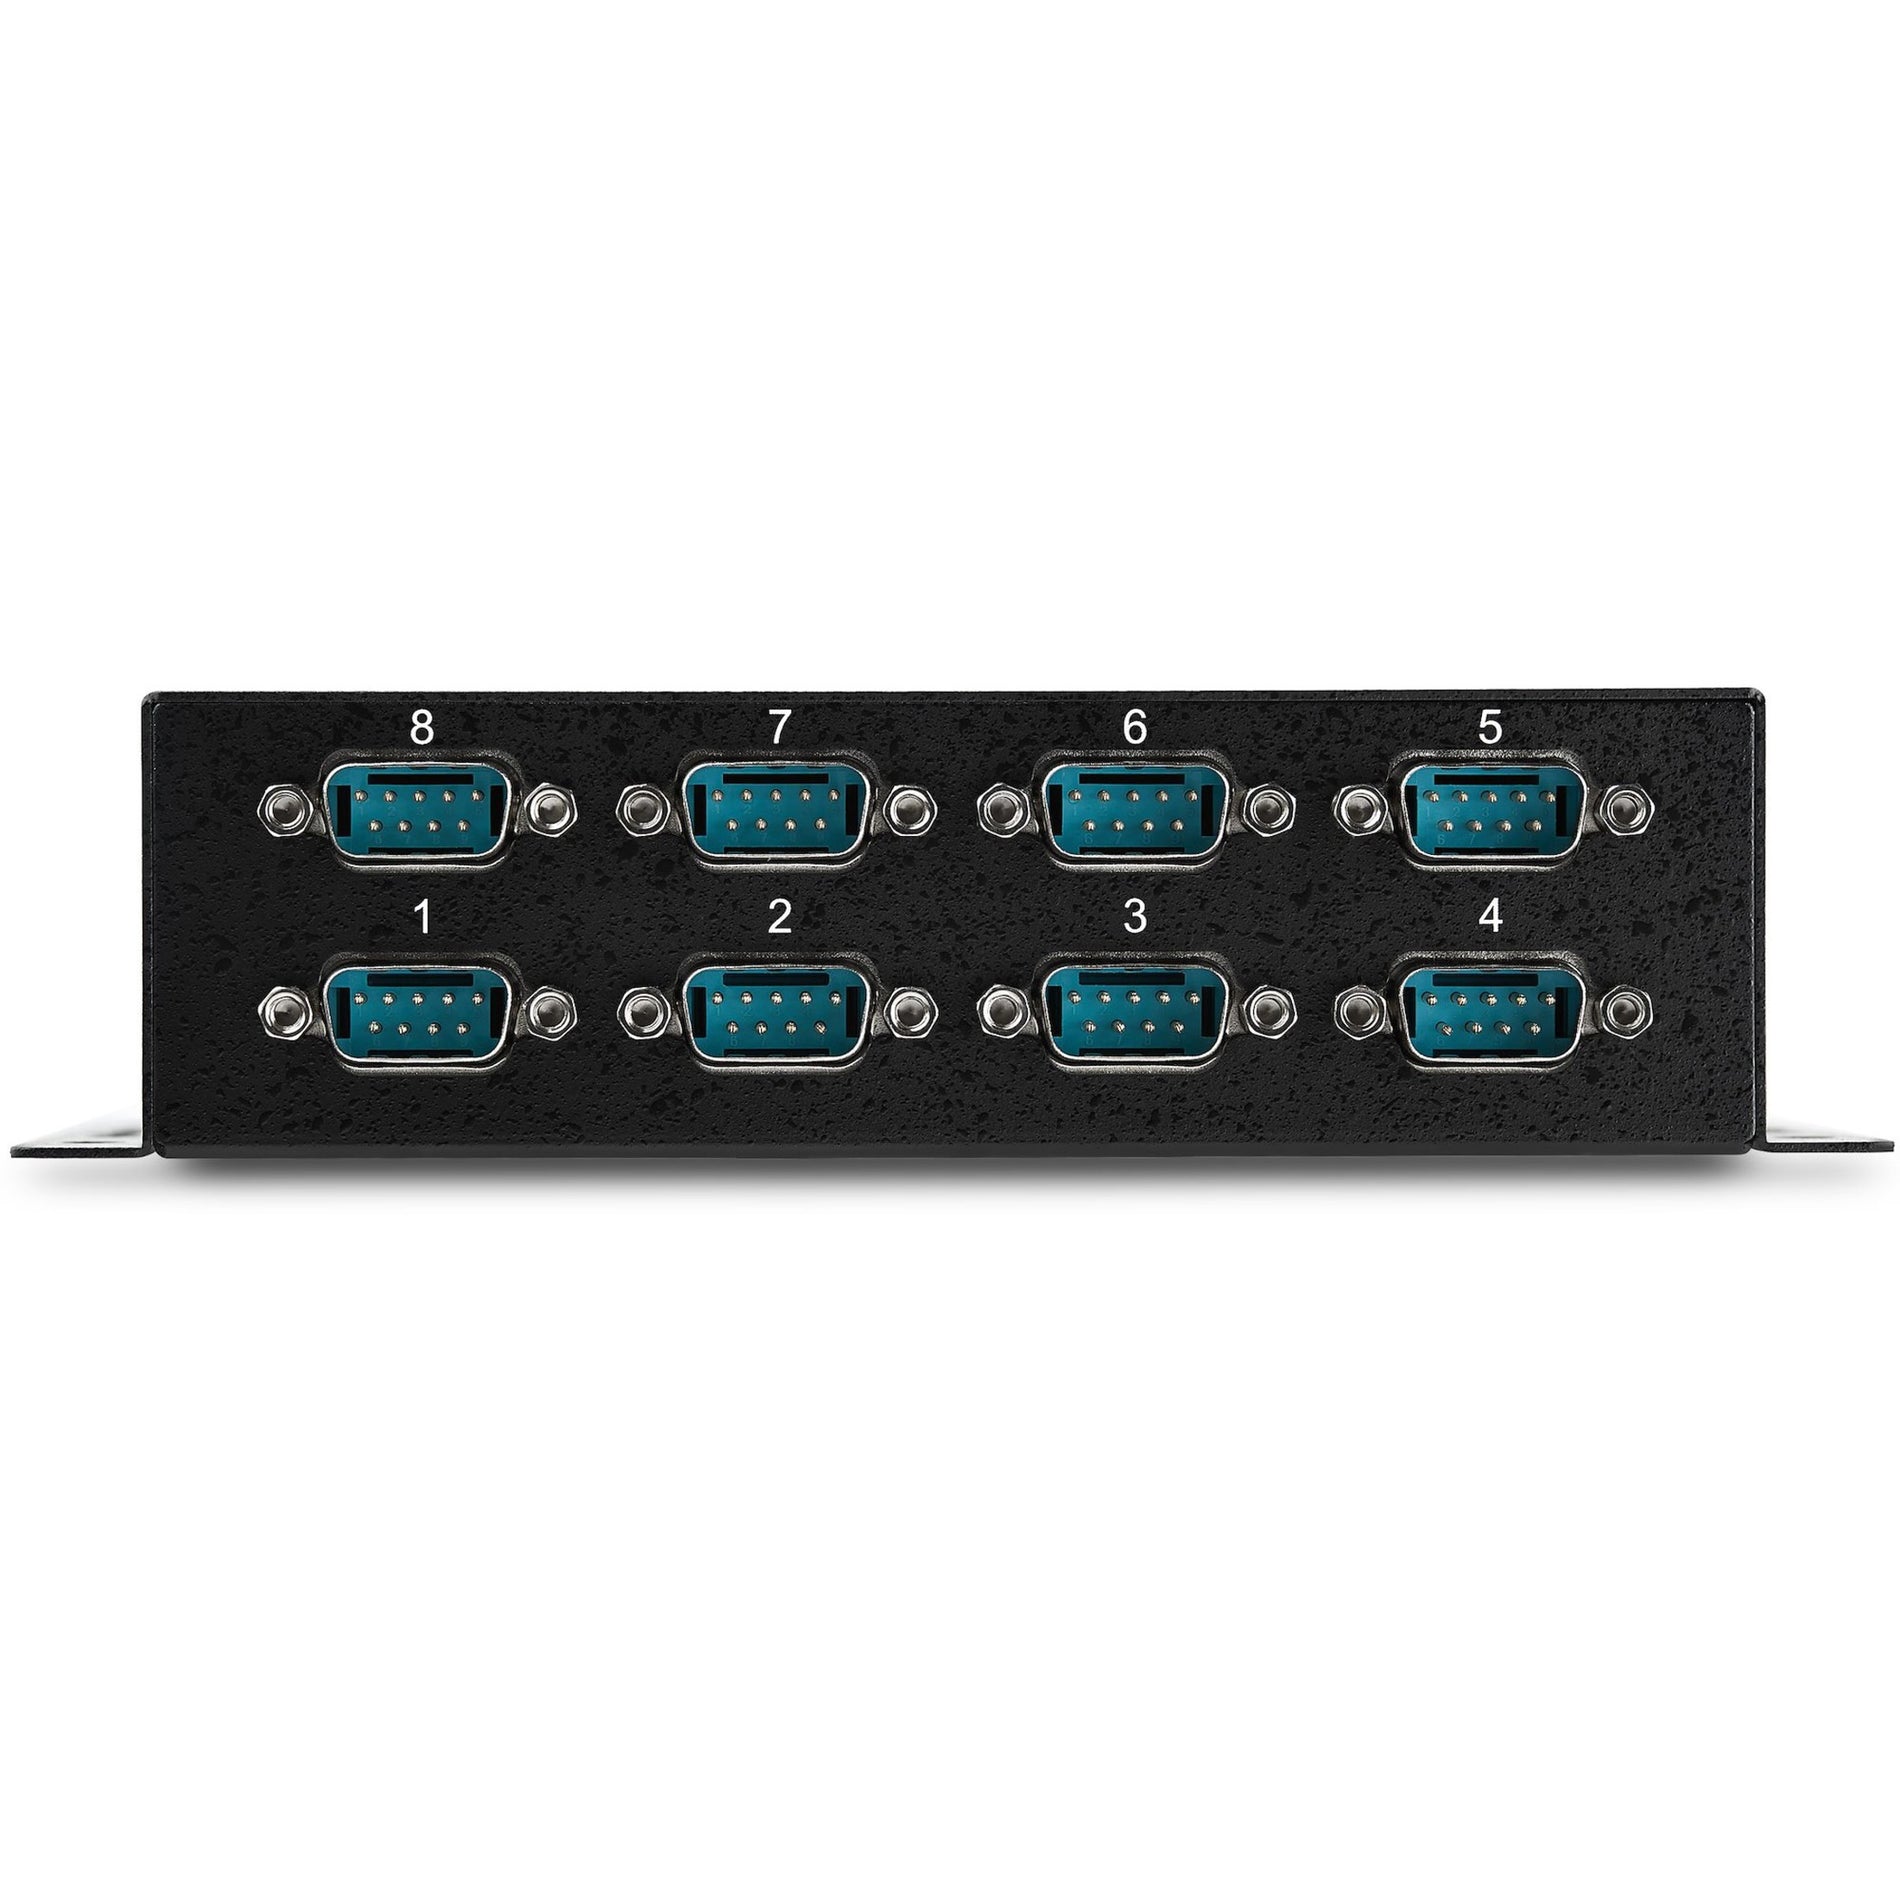 StarTech.com ICUSB2328I USB to RS-232 Serial Adapter Hub, 8 Port, 2 Year Warranty